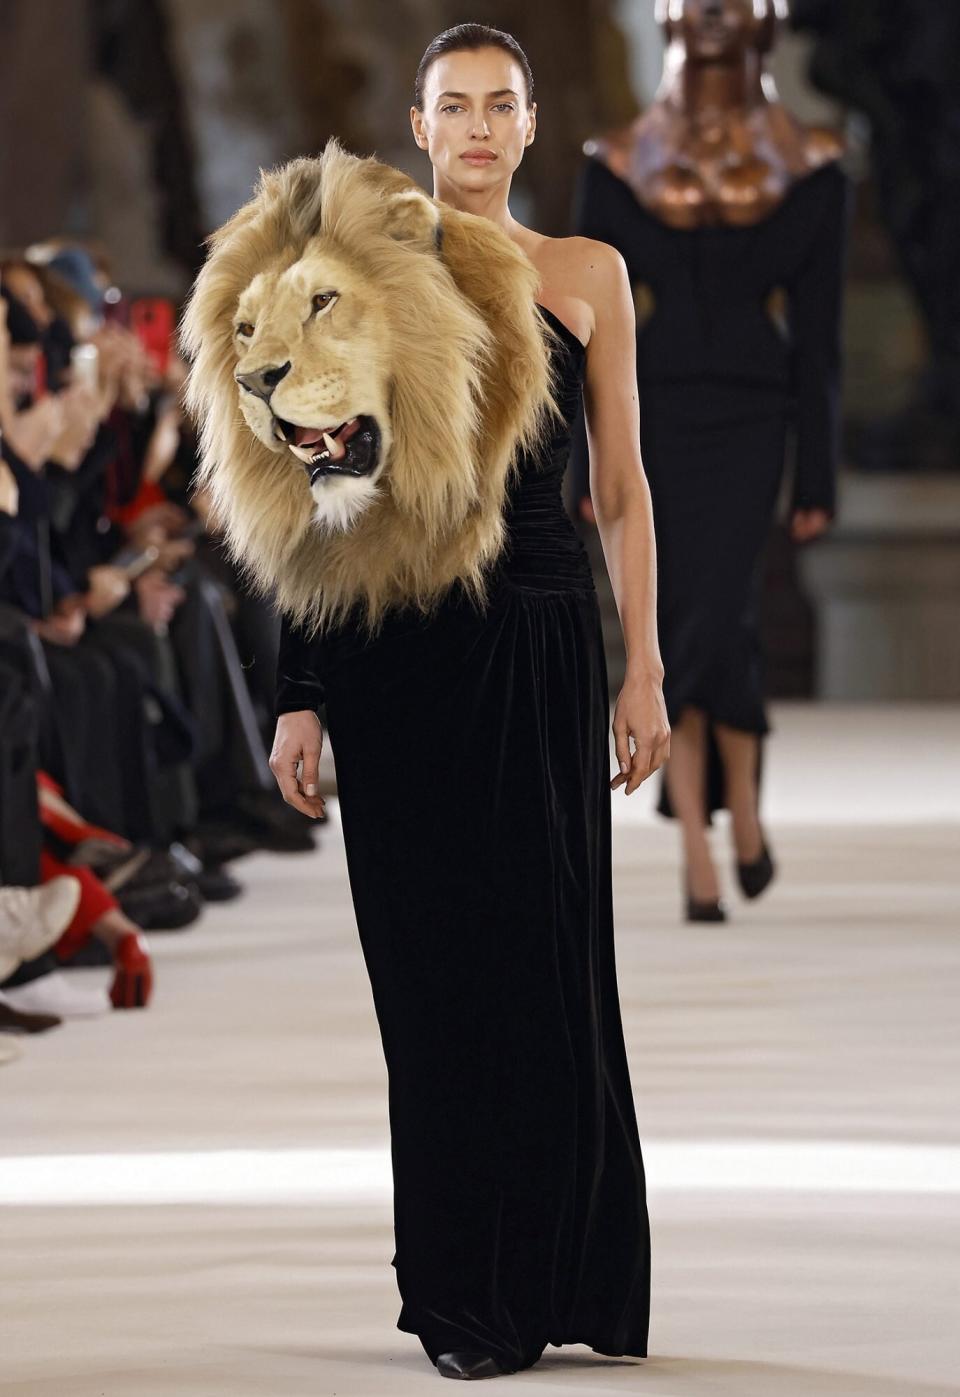 Irina Shayk walks the runway during the Schiaparelli Haute Couture Spring Summer 2023 show as part of Paris Fashion Week